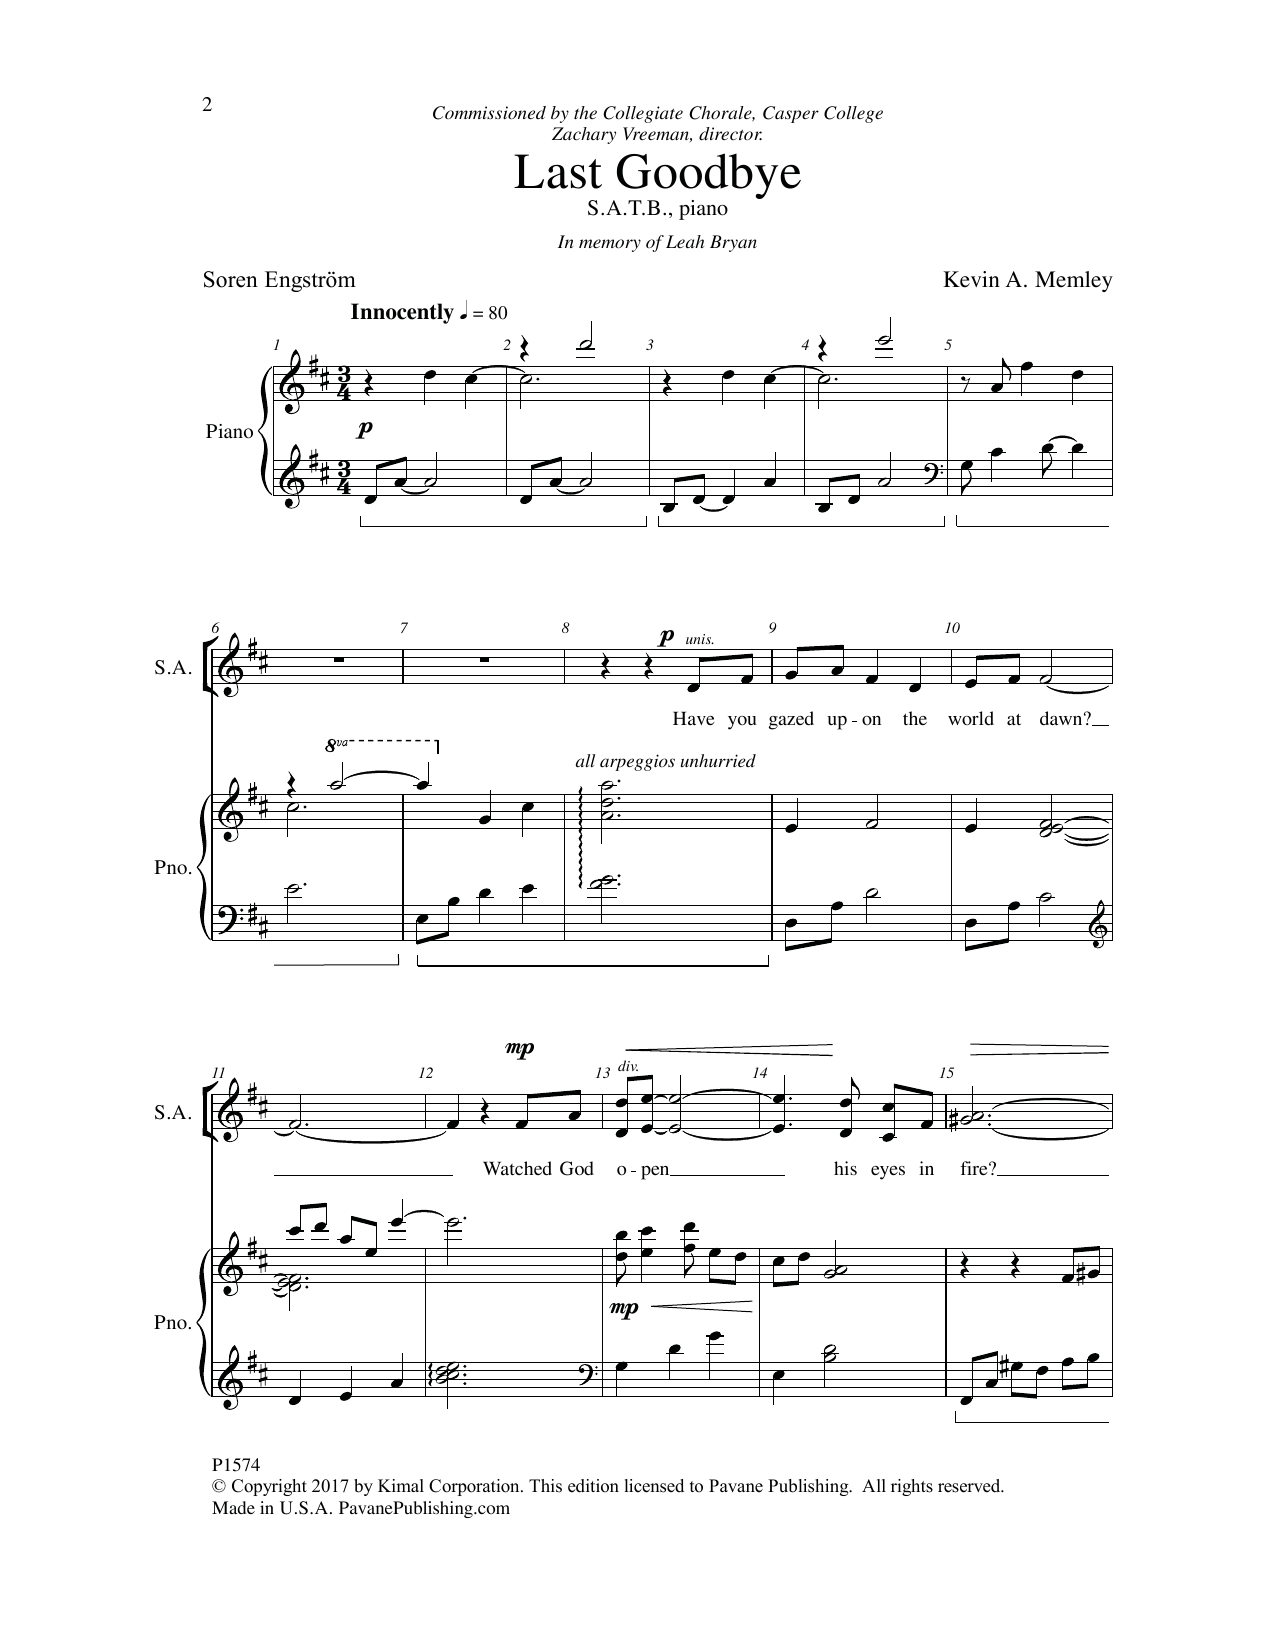 Soren Engström Last Goodbye Sheet Music Notes & Chords for Choral - Download or Print PDF